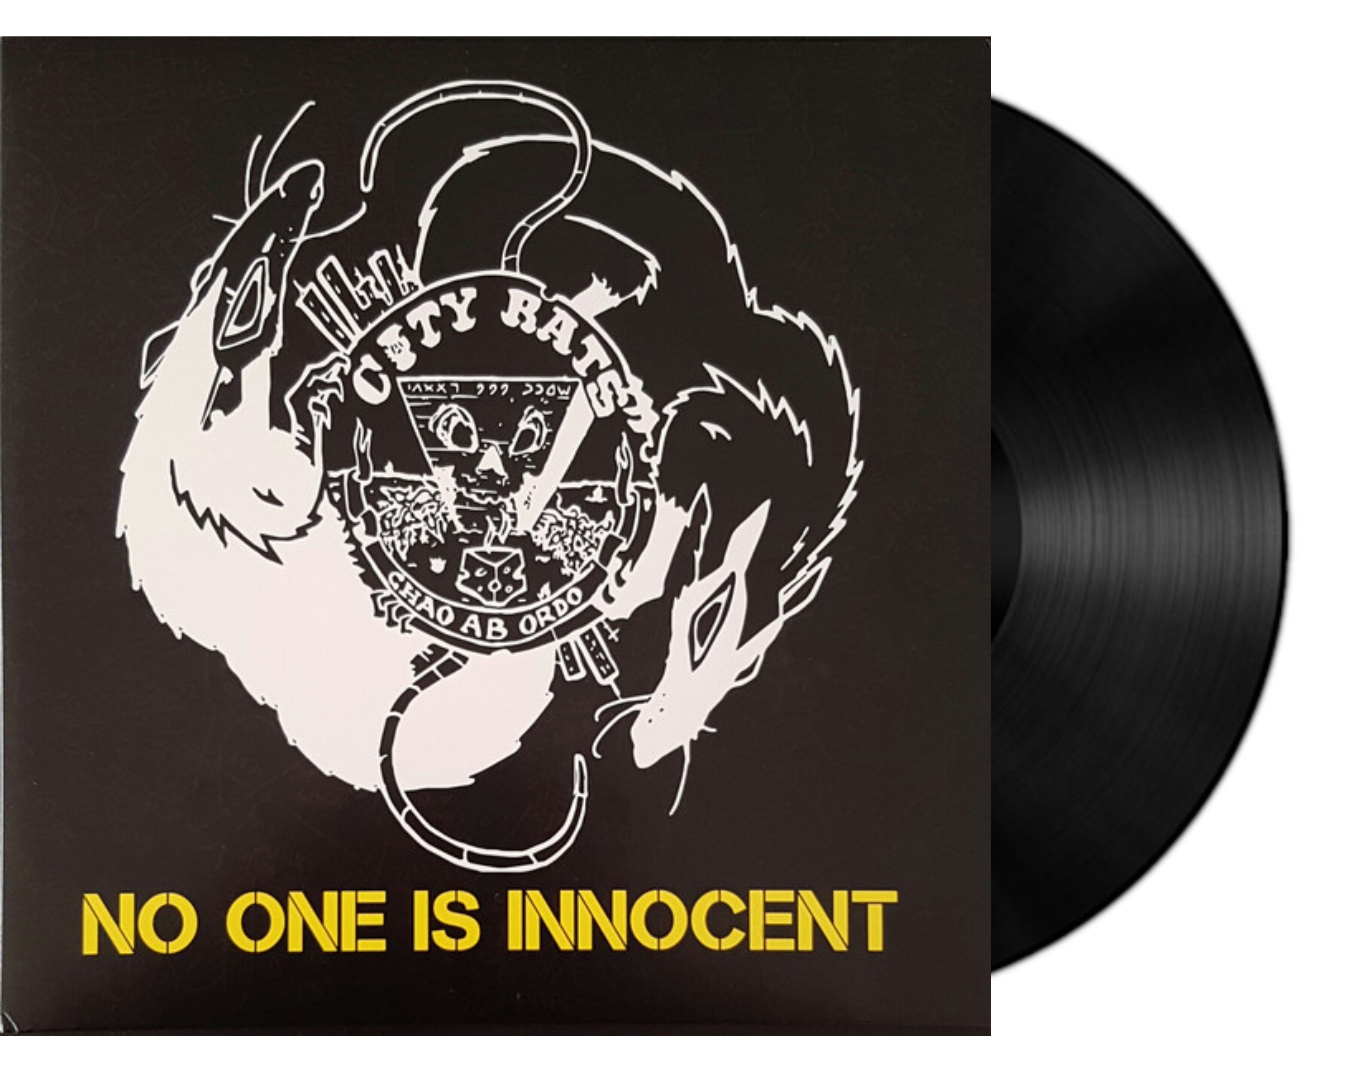 CITY RATS - No one is innocent LP